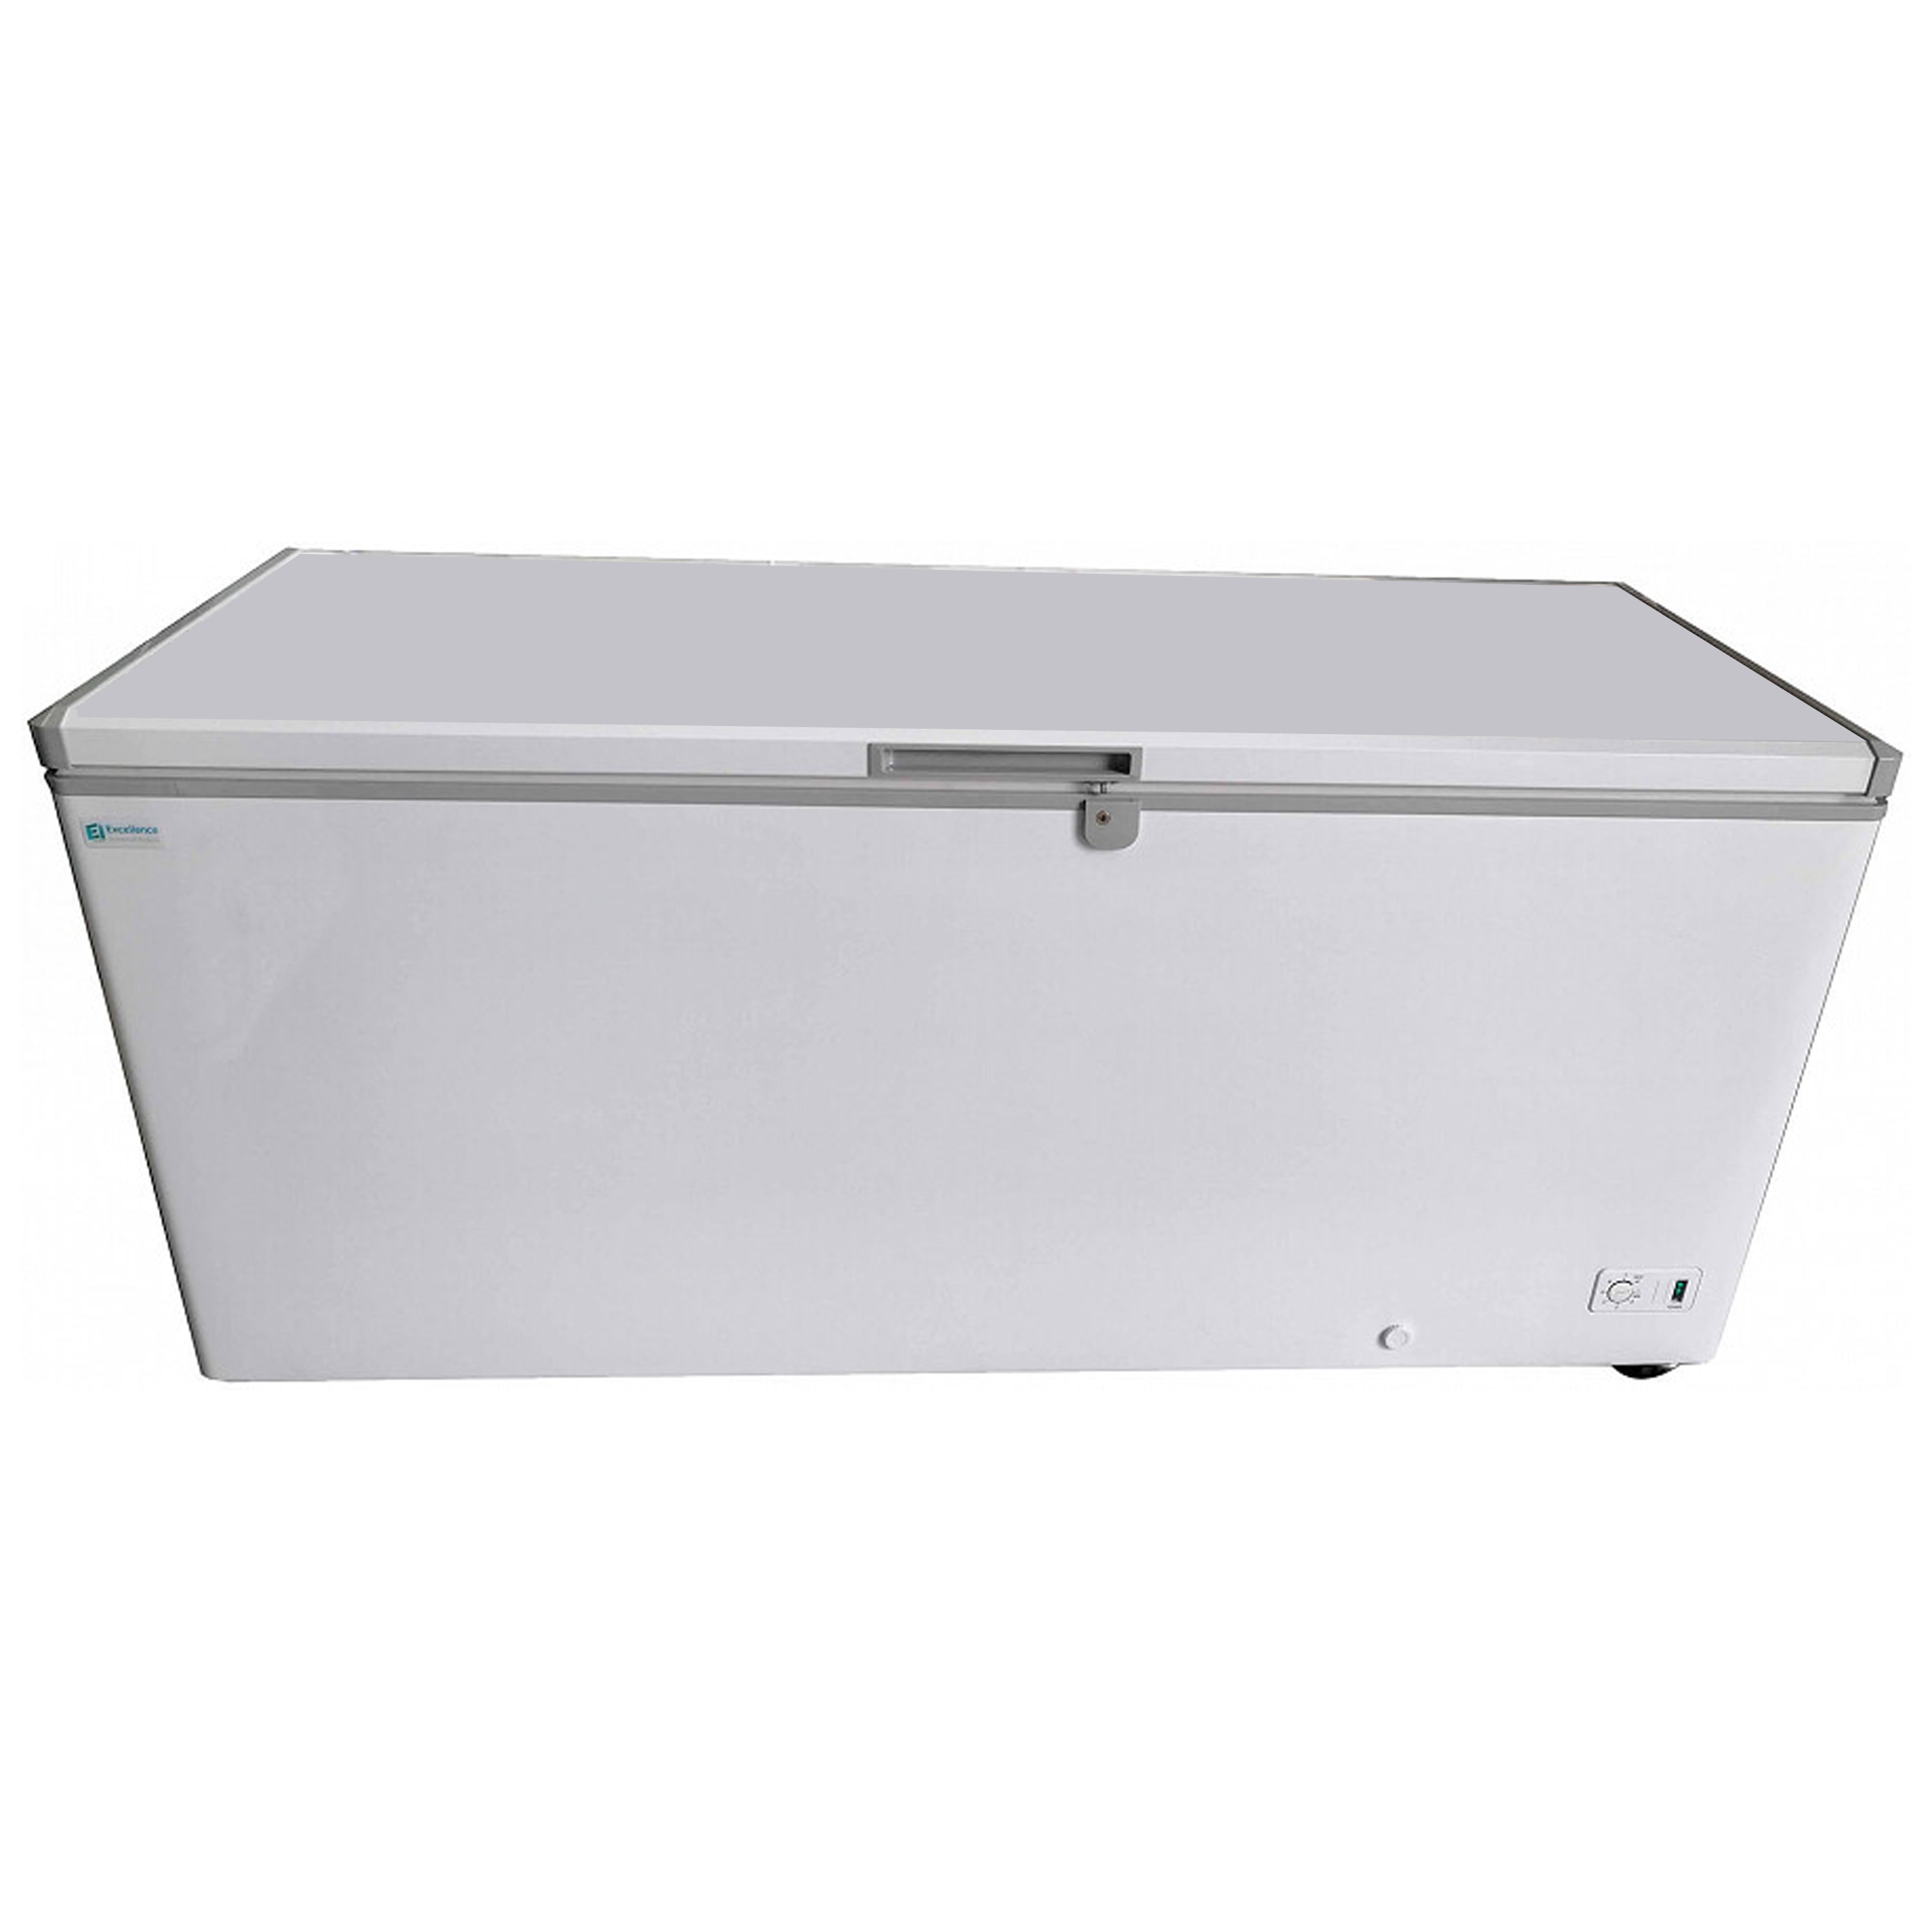 Excellence Industries - BD-16, 59" Commercial Chest Freezer 1 Solid Door 15.8 cu. ft.